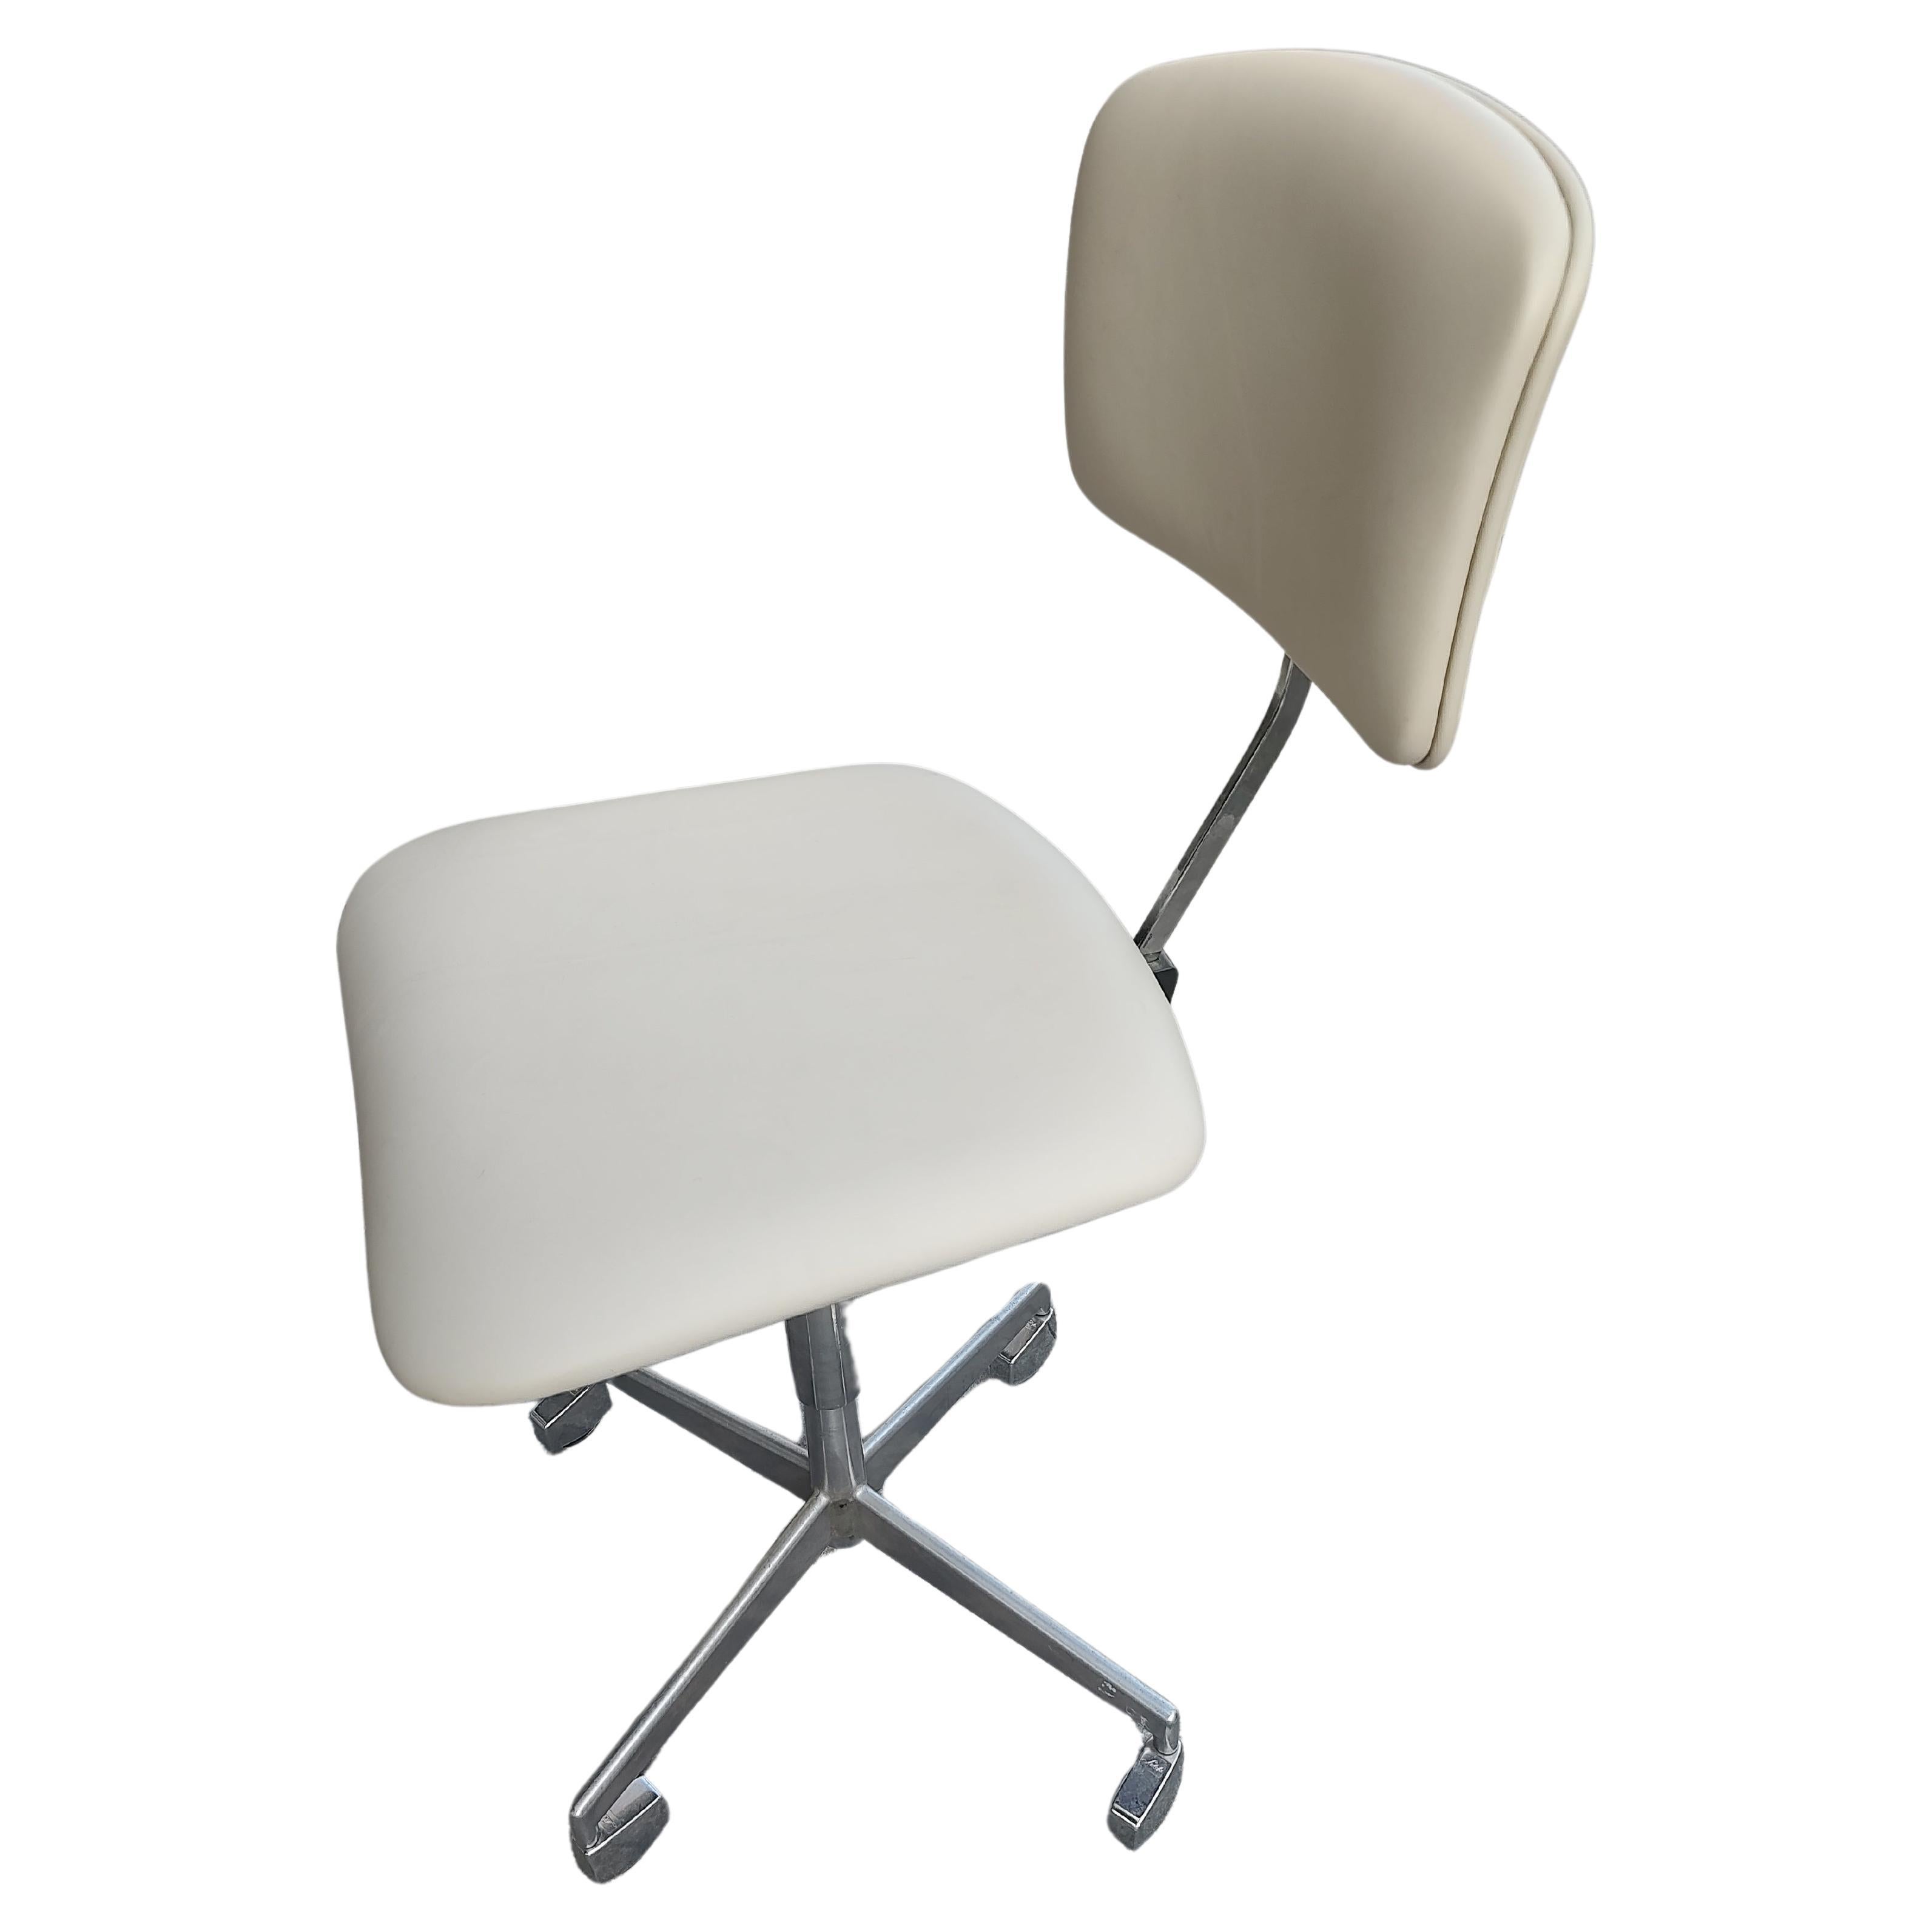 Mid Century Danish Modern Adjustable Desk Chair Jørgen Rasmussen for Labofa